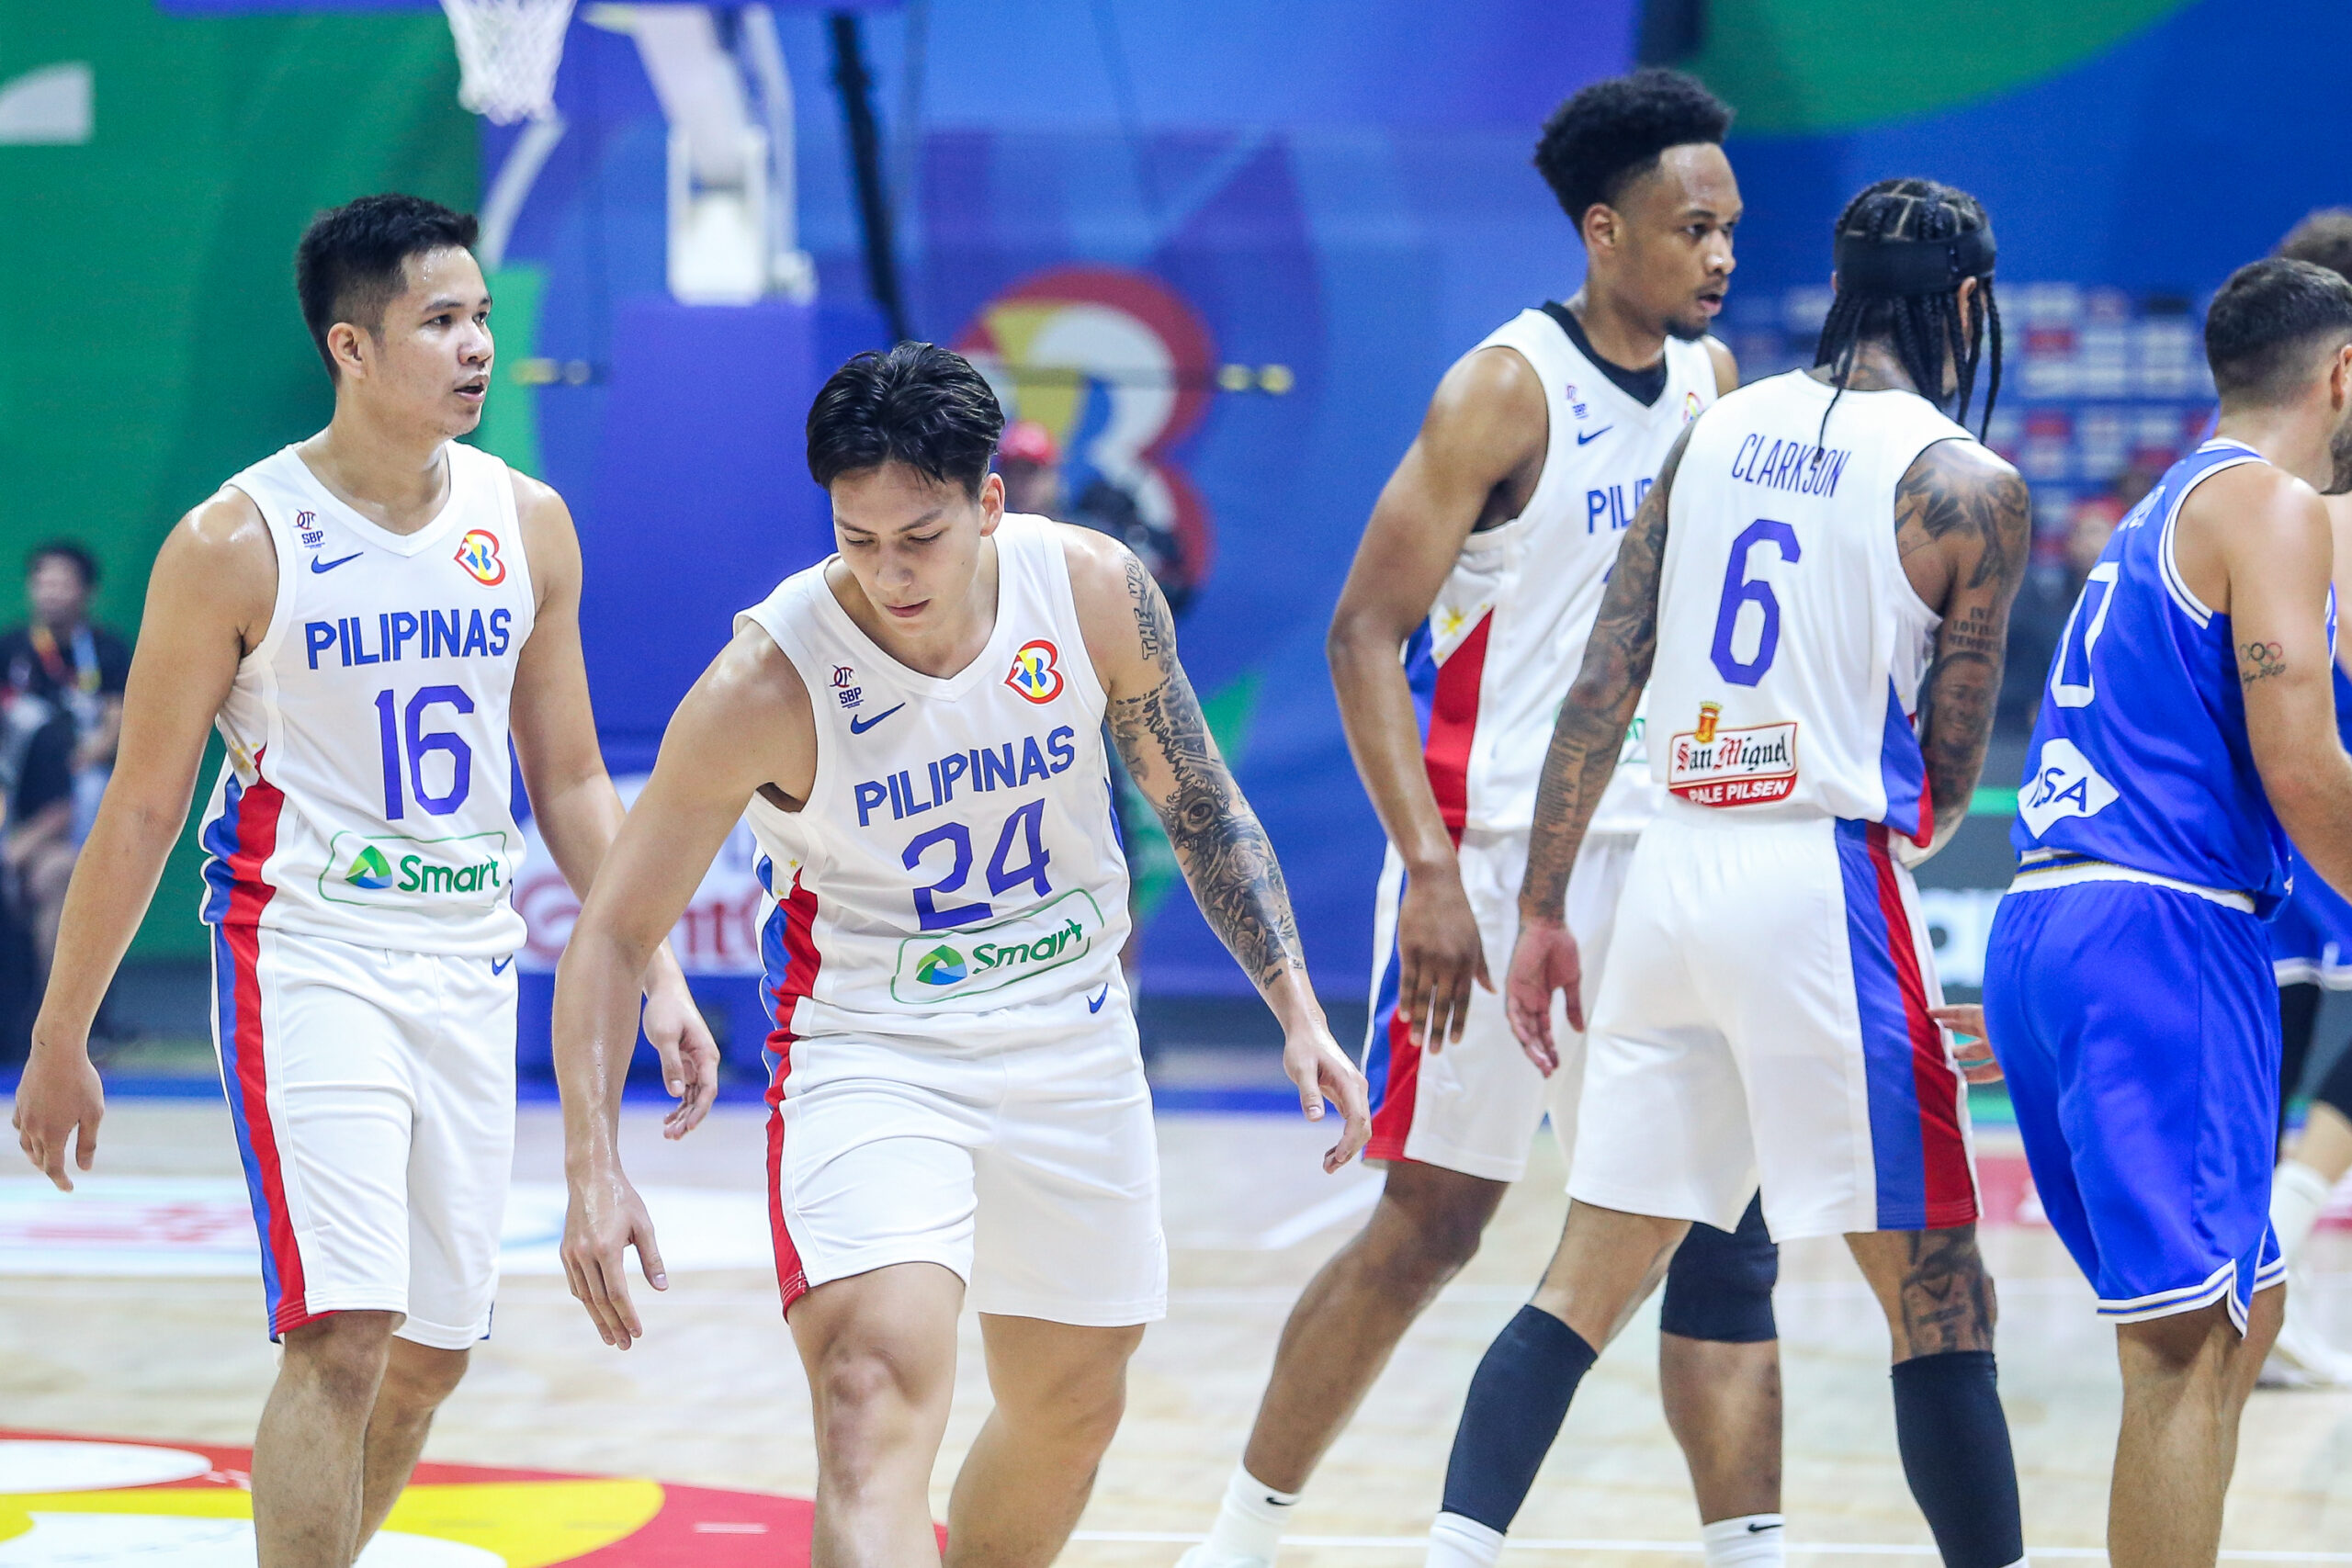 Fiba World Cup: Jordan Clarkson lauds Gilas Pilipinas
teammates